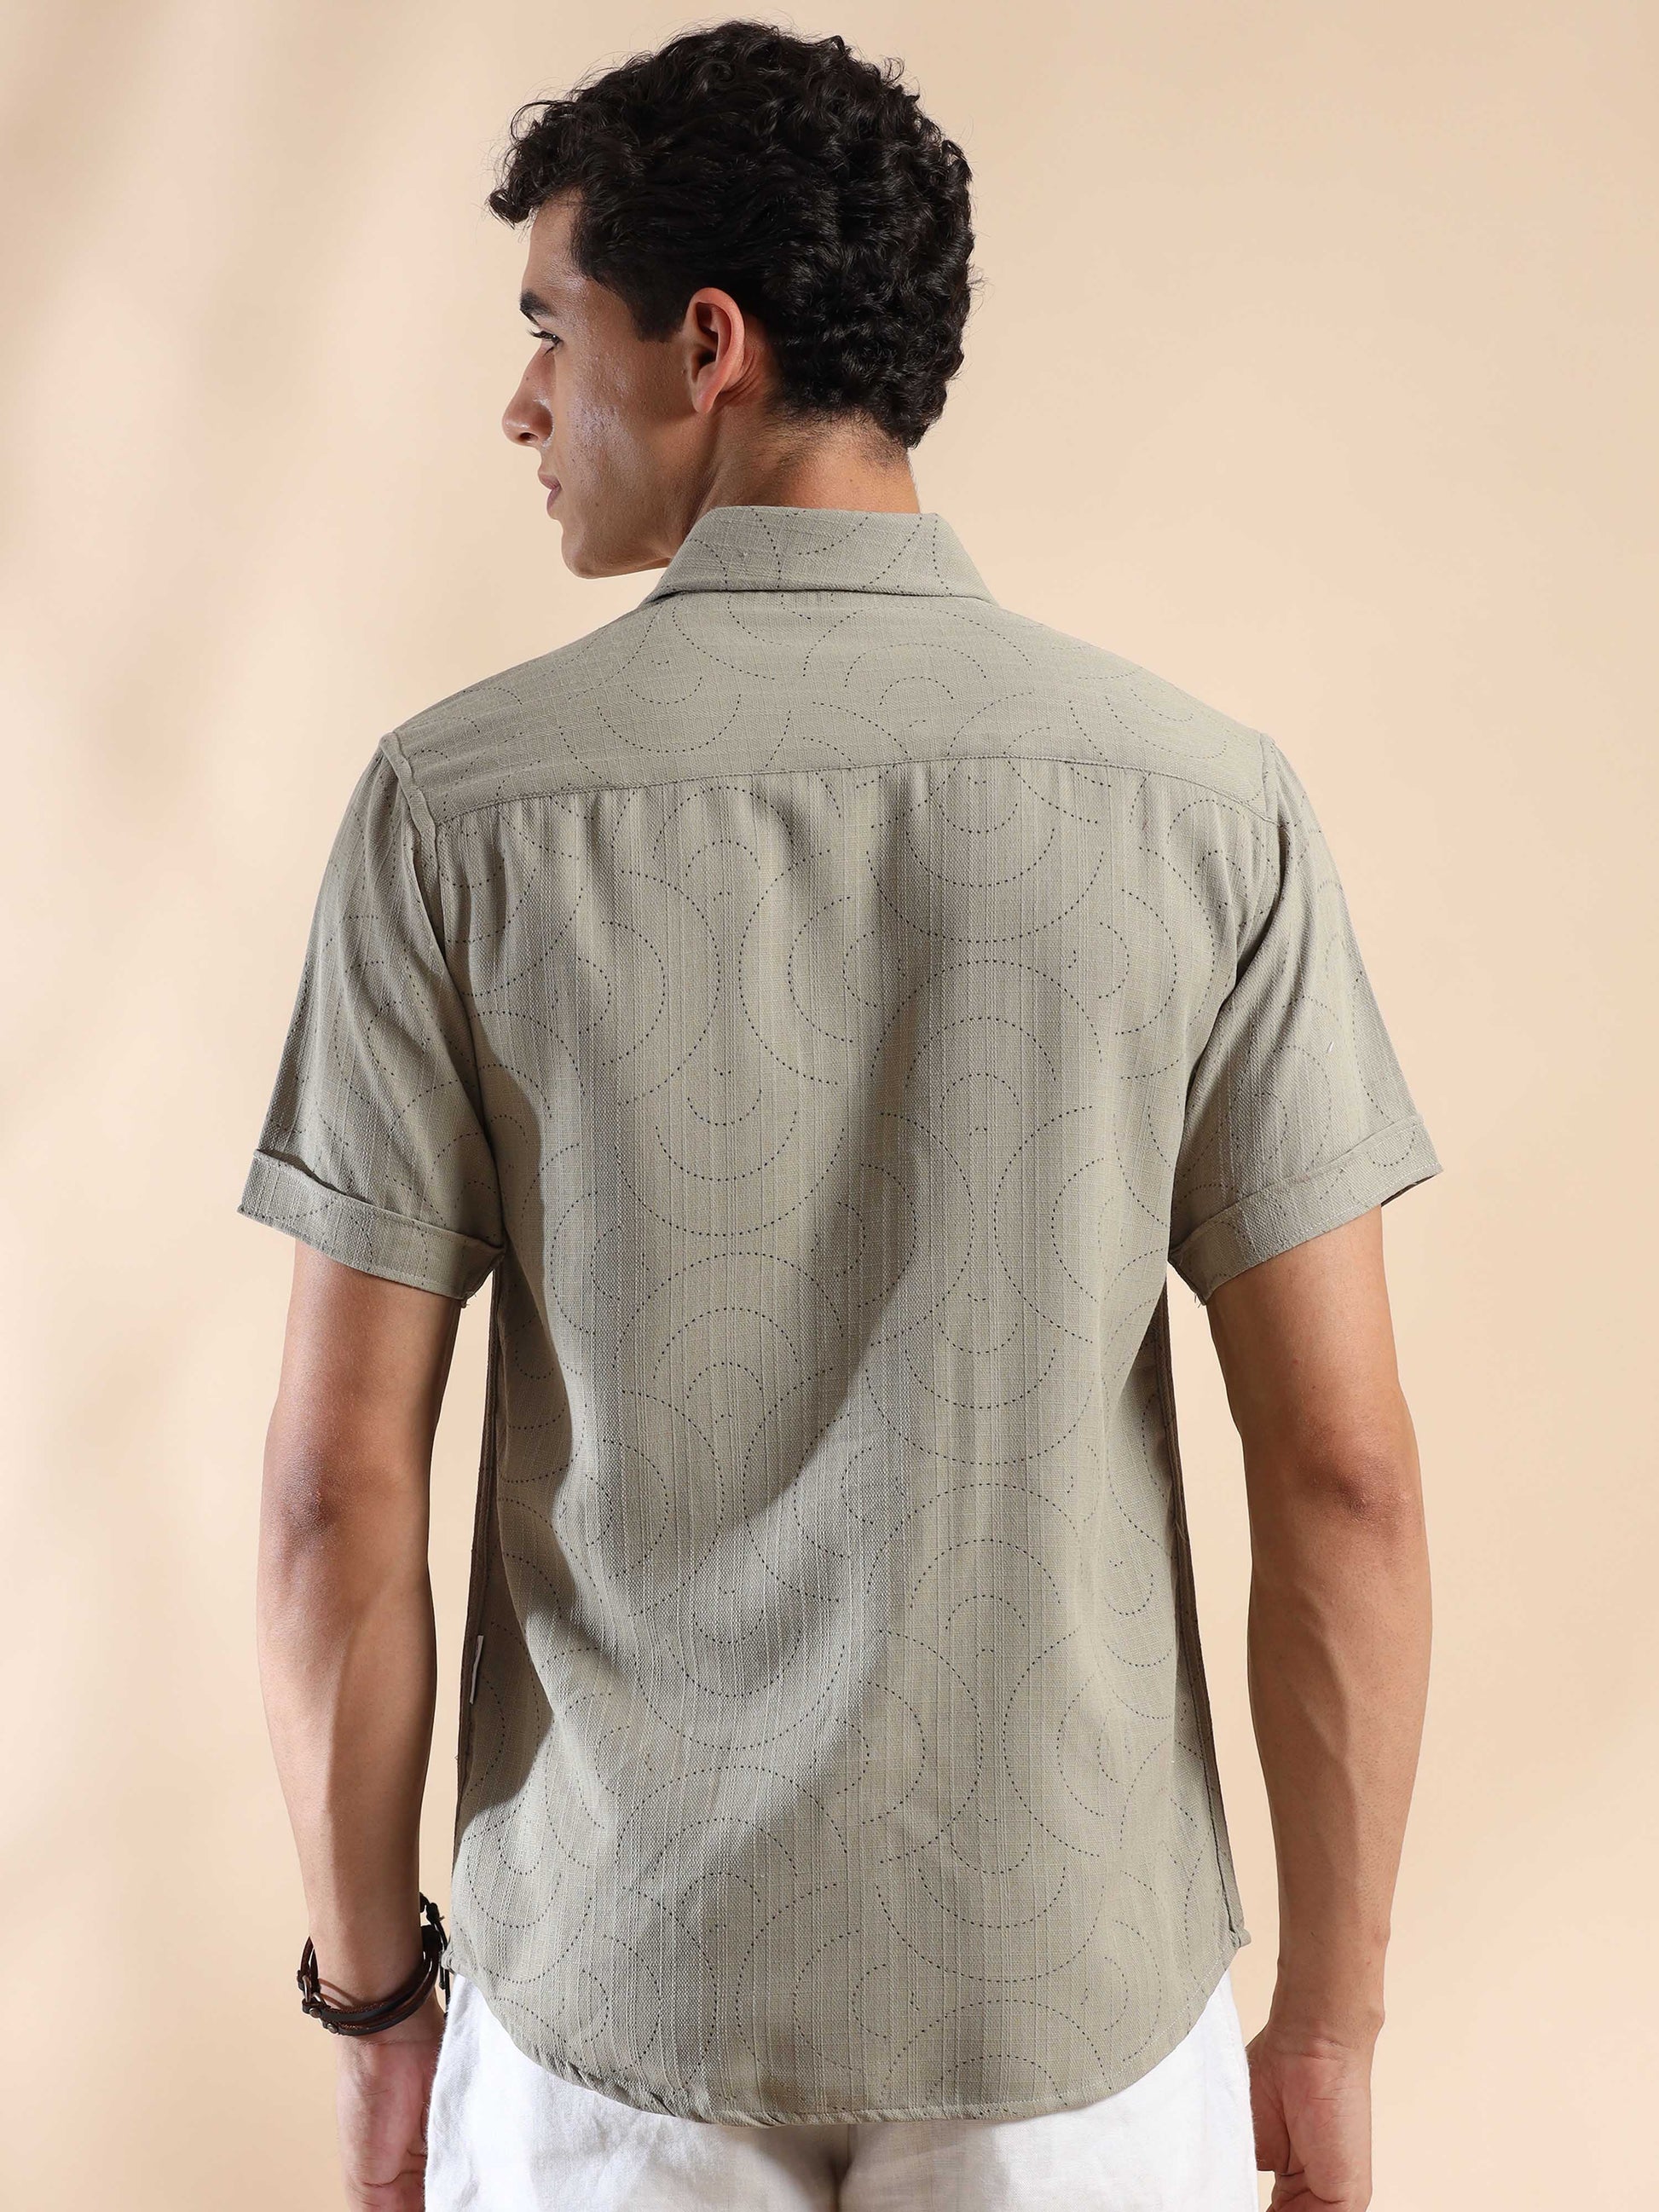 sky half sleeve grey cotton shirt for men